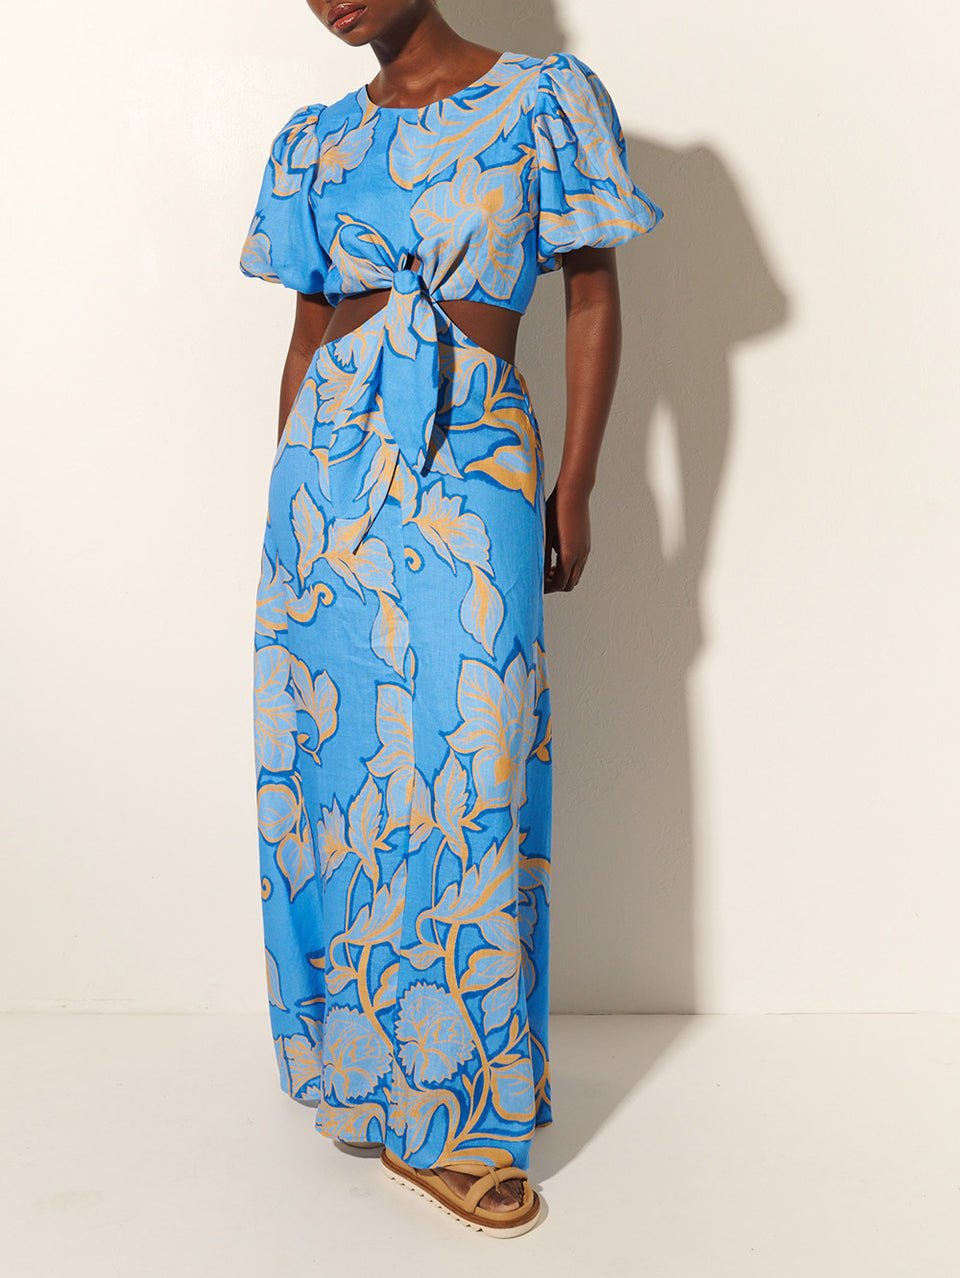 Taniana Cut Out Maxi Dress KIVARI | Model wears blue and orange floral maxi dress